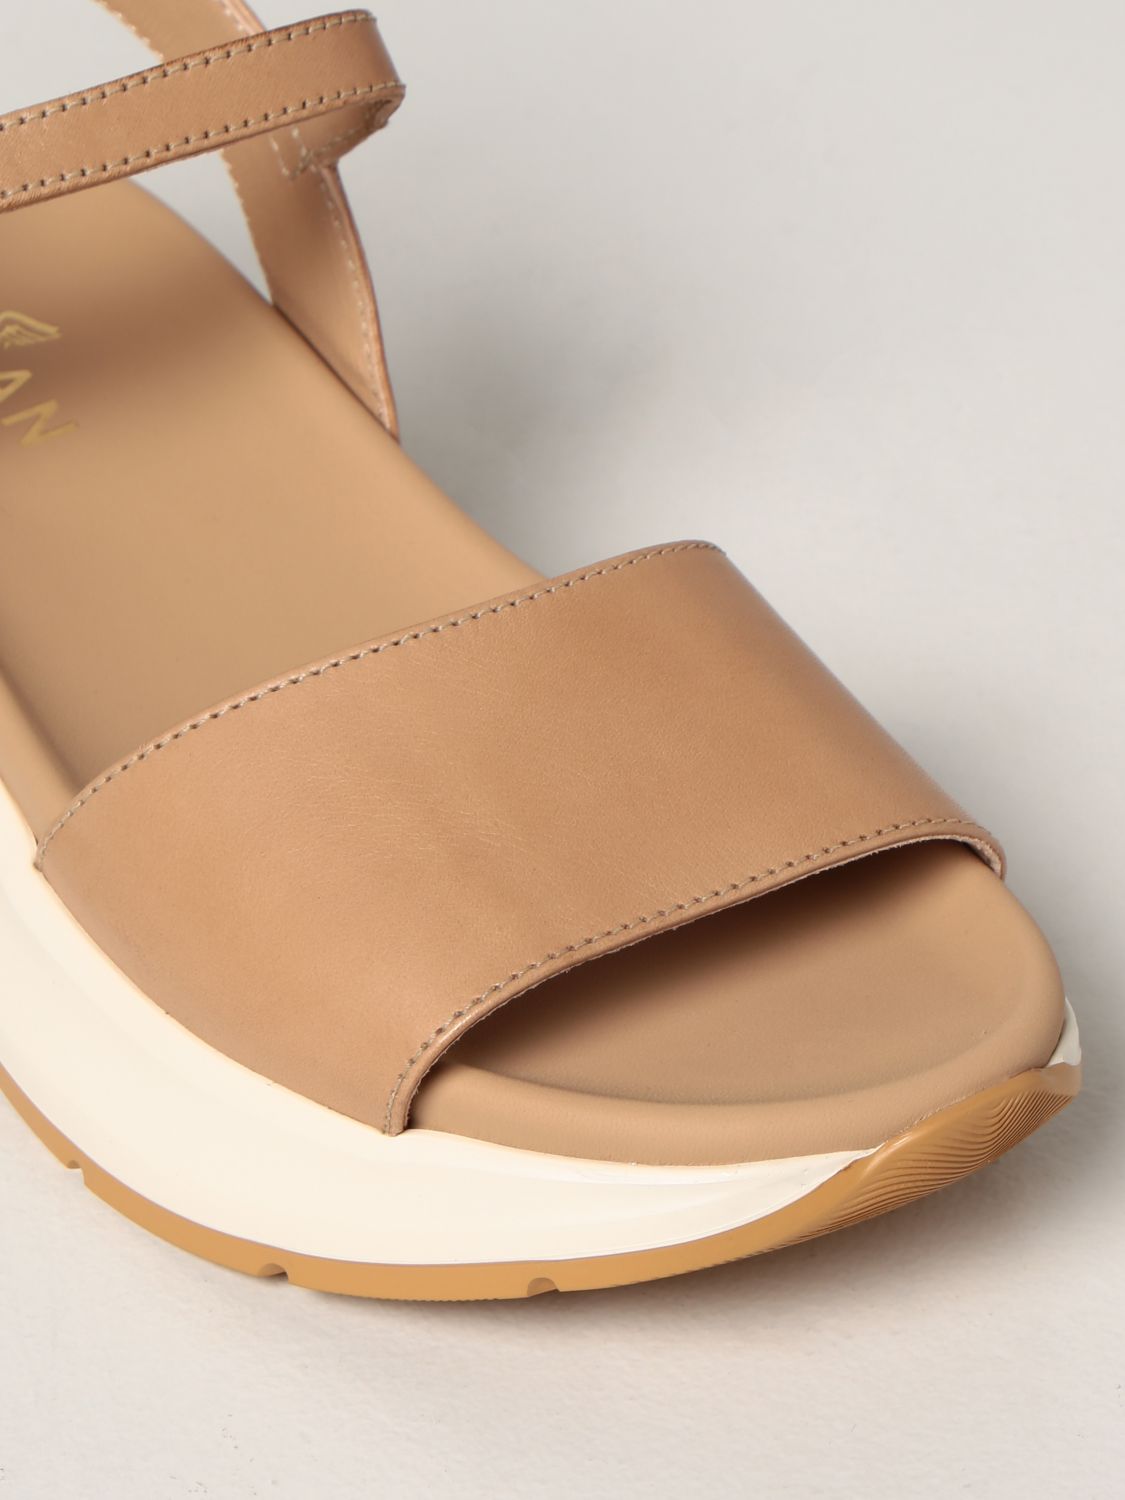 Flat sandals Hogan: Sandal H598 Hogan in leather leather 4